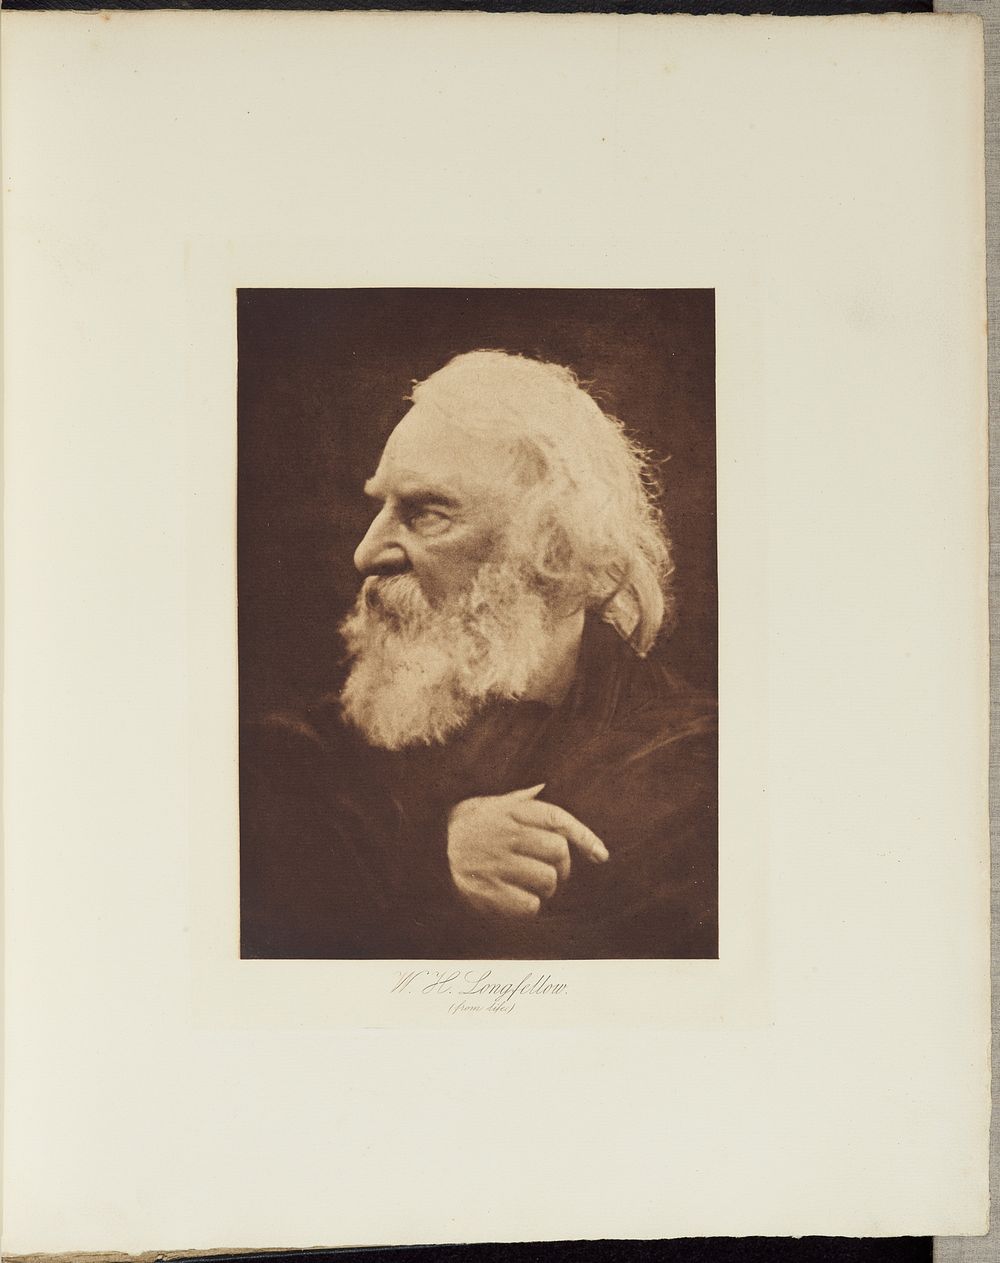 H. W. Longfellow by Julia Margaret Cameron